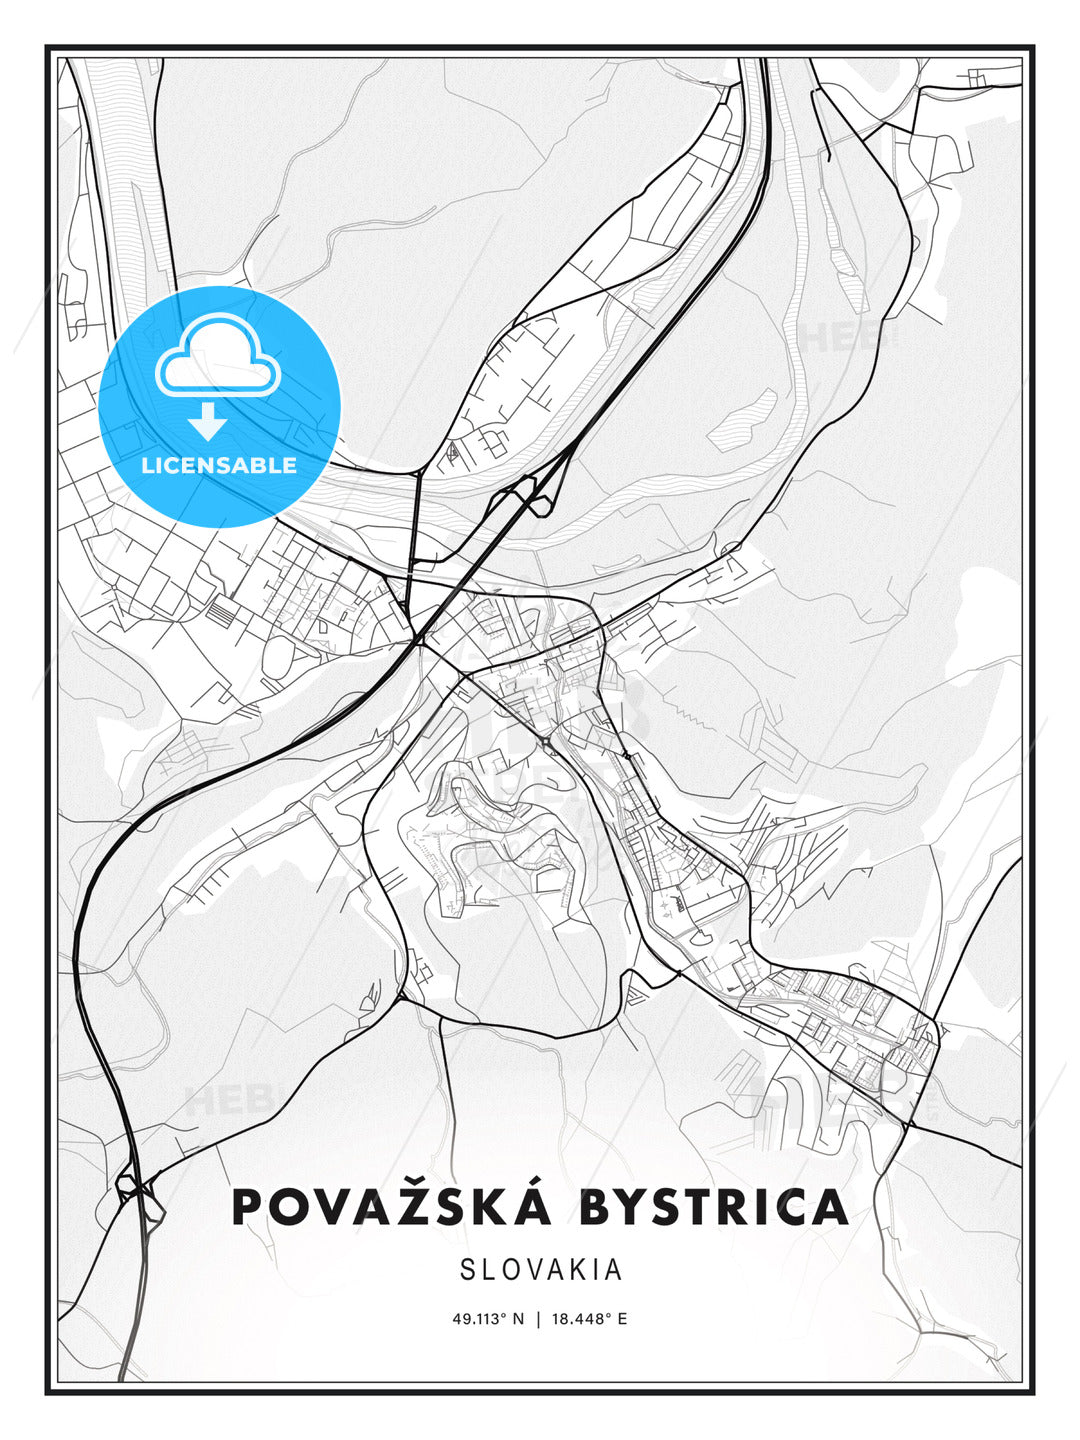 Považská Bystrica, Slovakia, Modern Print Template in Various Formats - HEBSTREITS Sketches